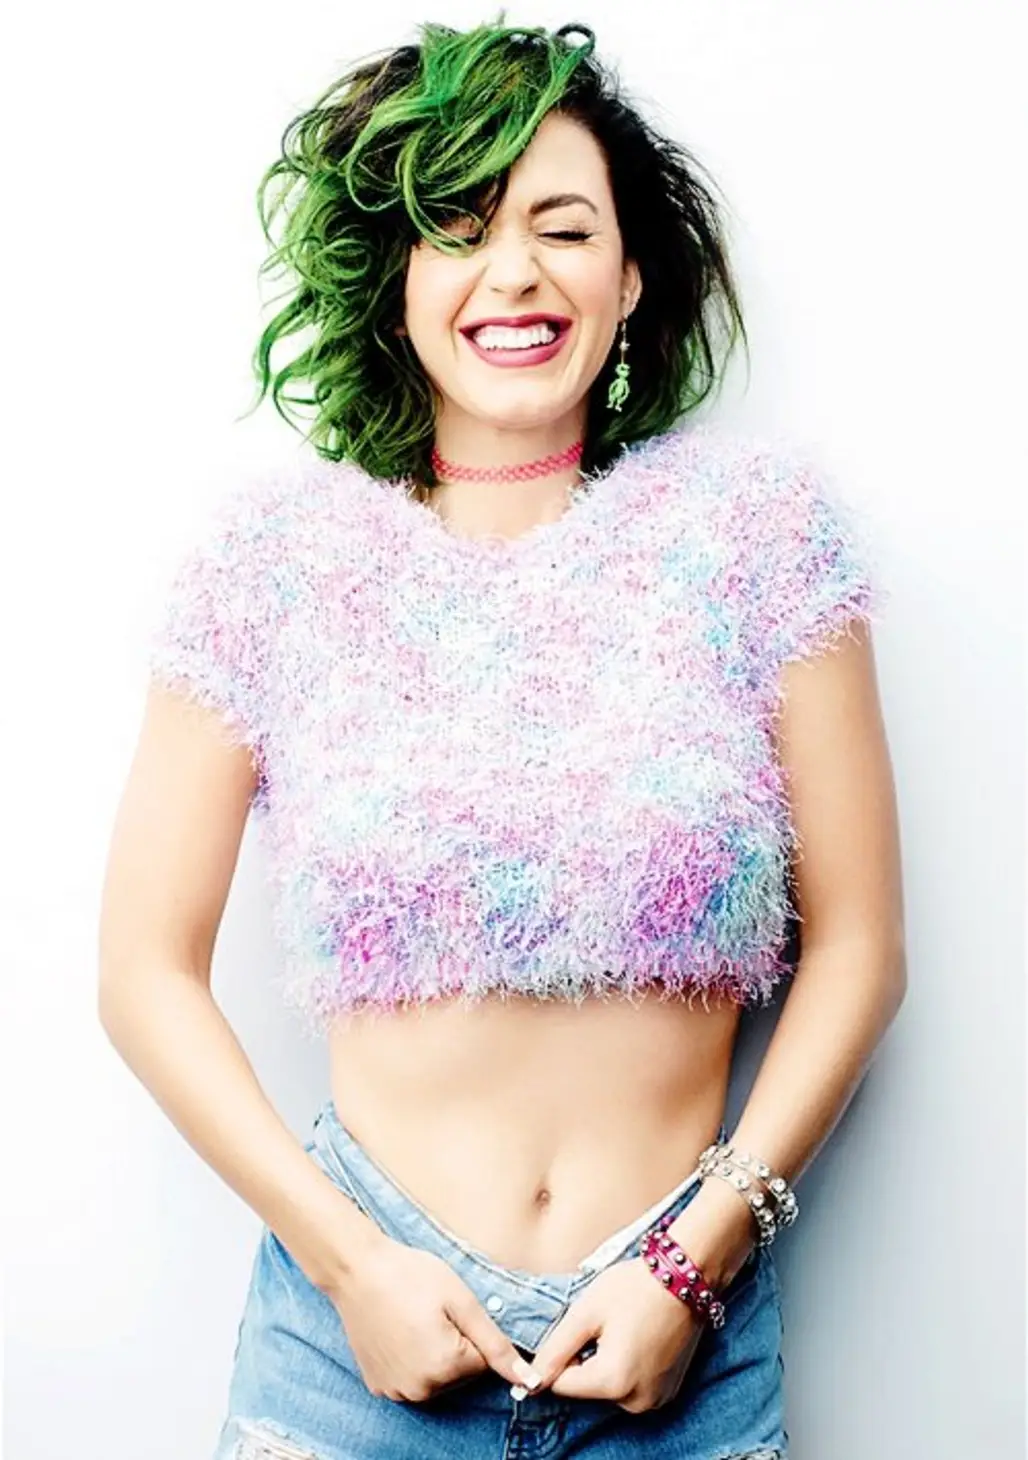 Katy Perry, Singer